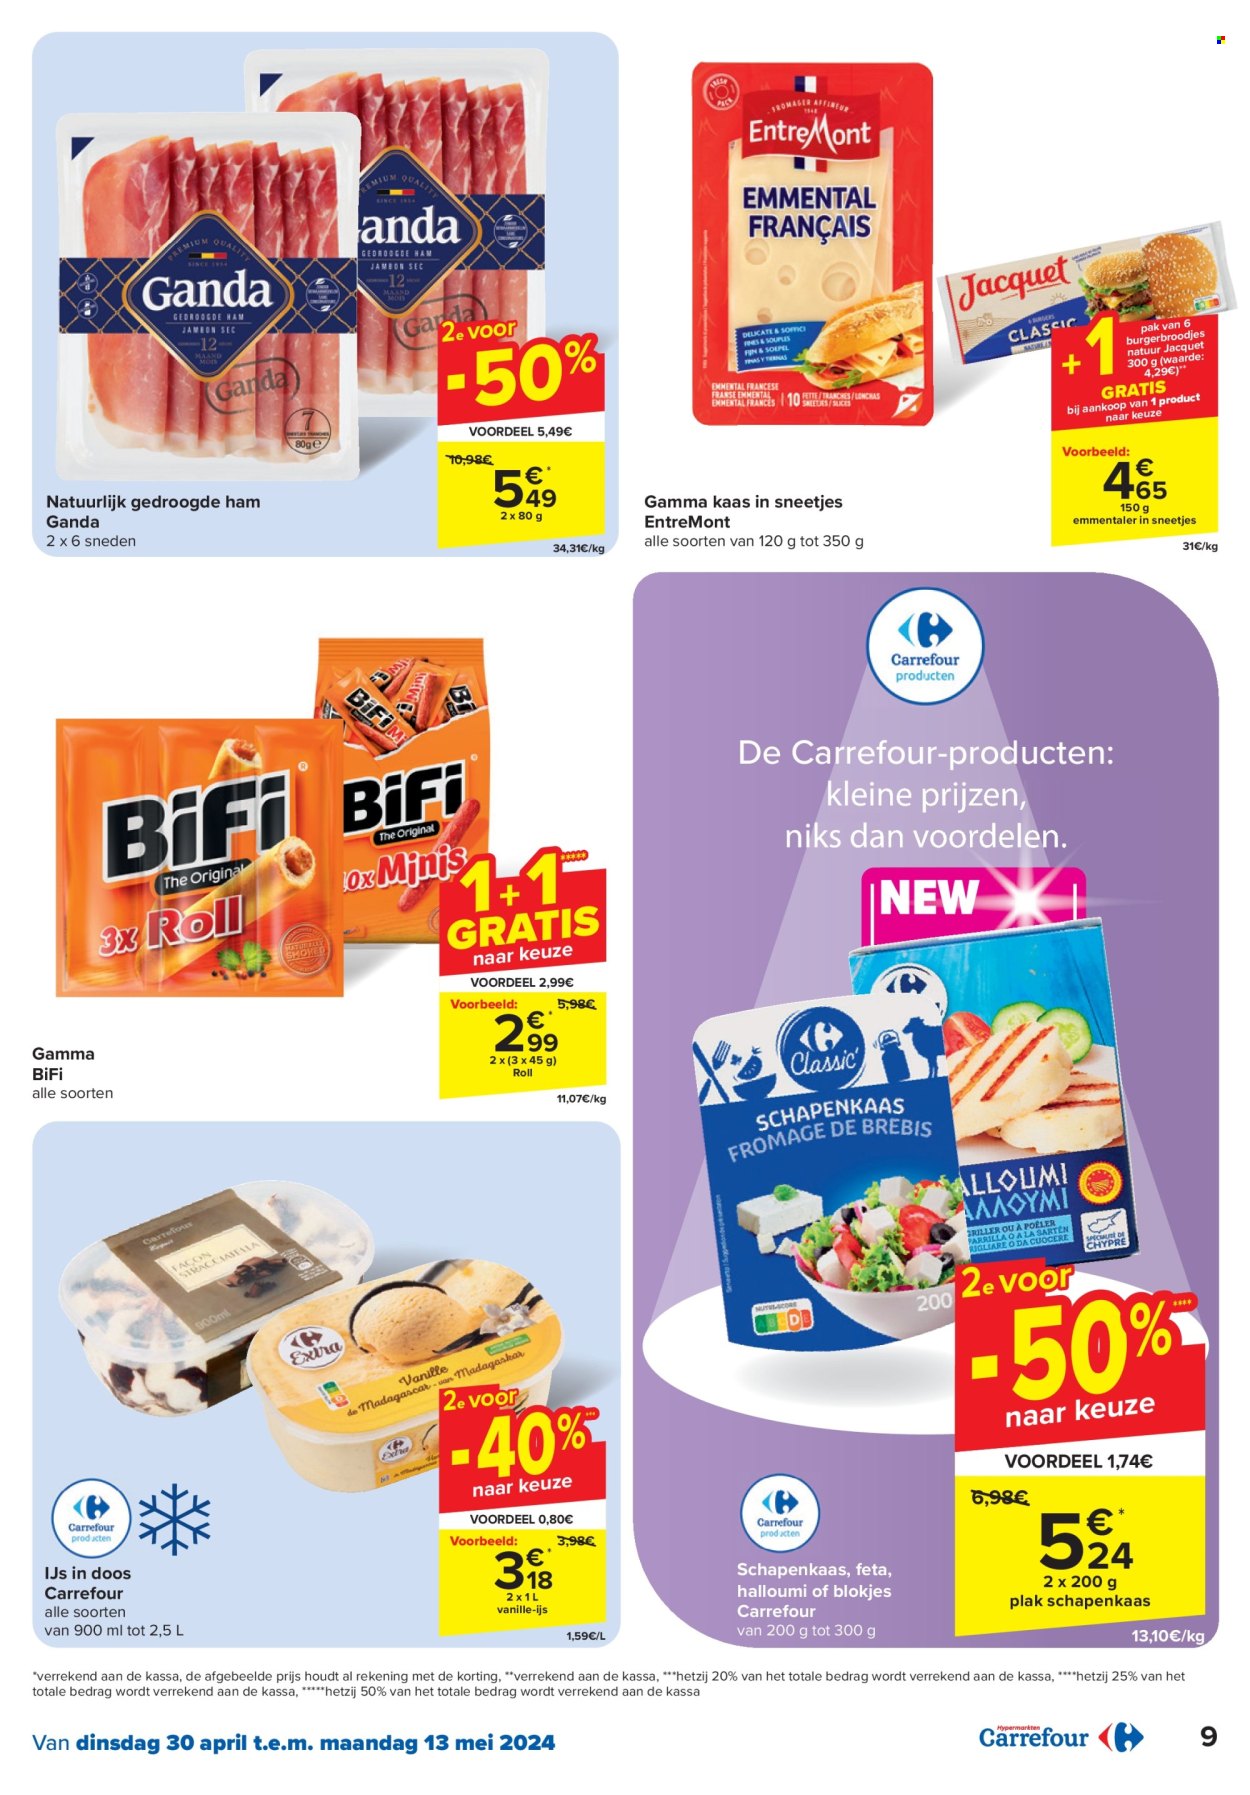 thumbnail - Carrefour hypermarkt-aanbieding - 30/04/2024 - 13/05/2024 -  producten in de aanbieding - Gamma, ham, gedroogde ham, halloumi, kaas, Feta, Ijs. Pagina 9.